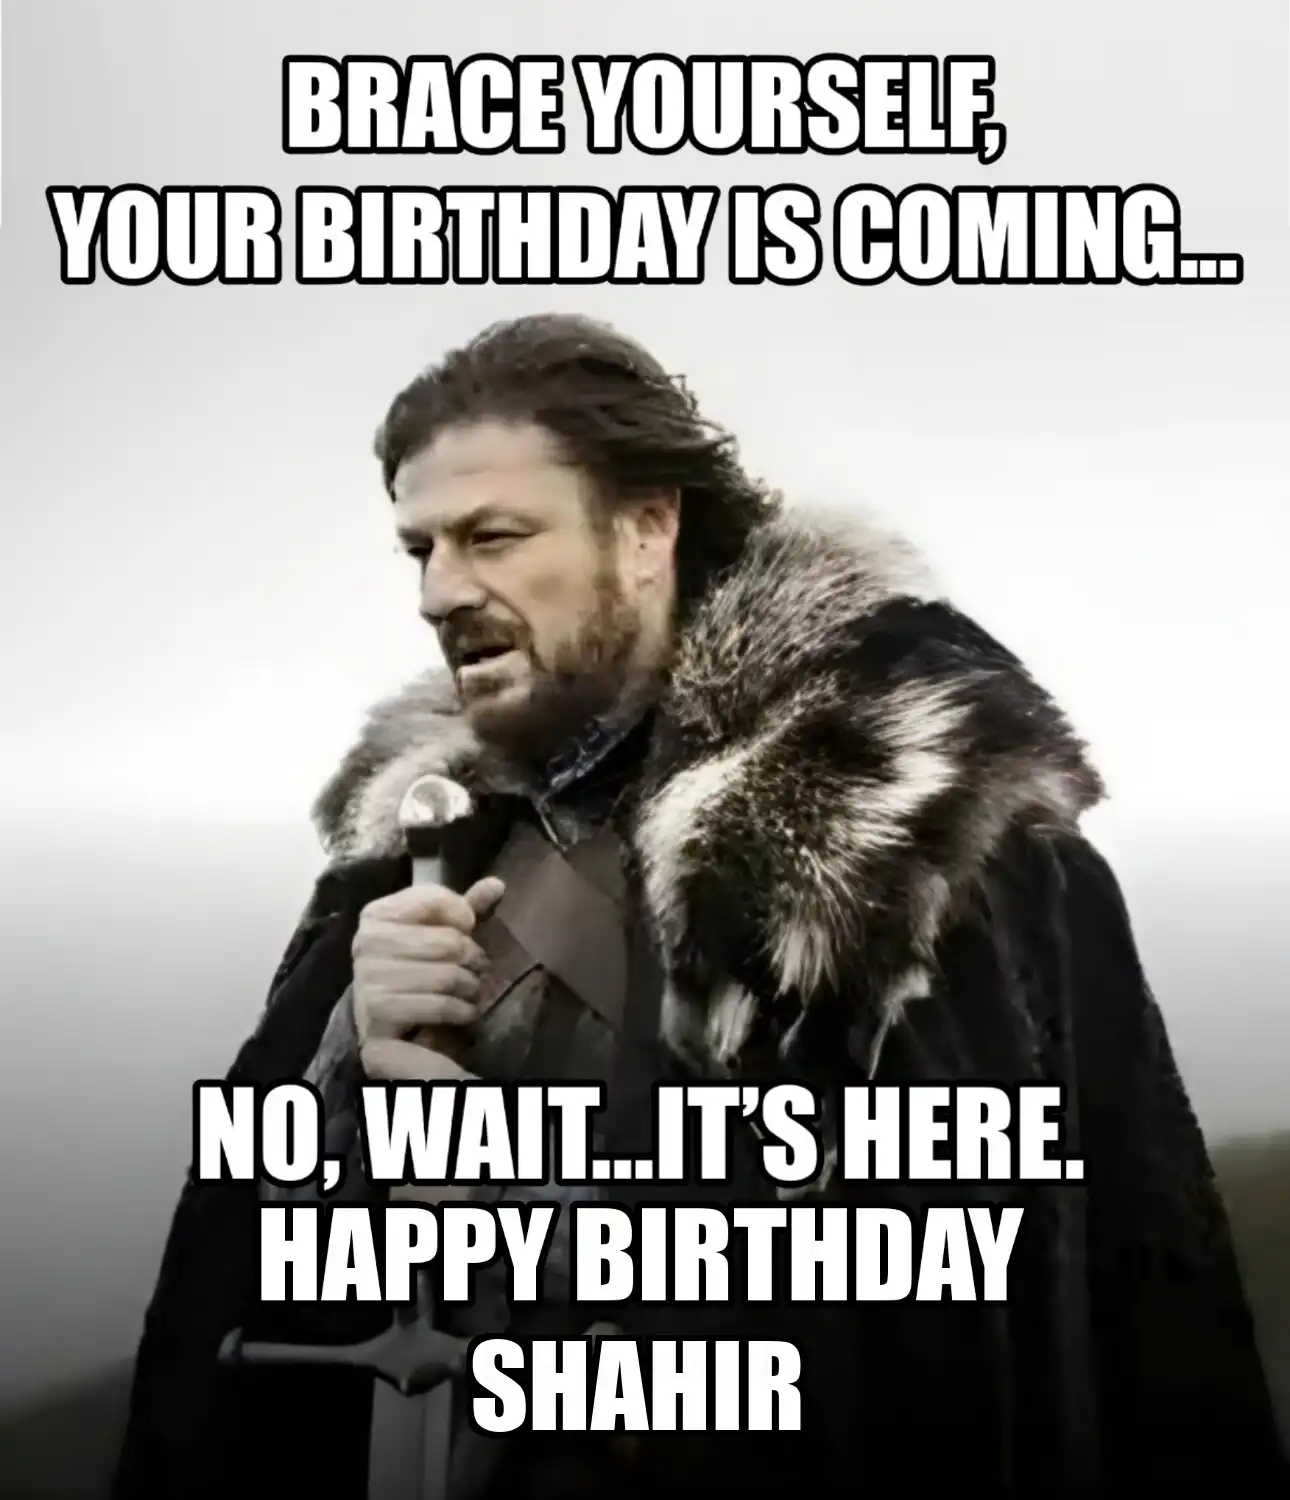 Happy Birthday Shahir Brace Yourself Your Birthday Is Coming Meme